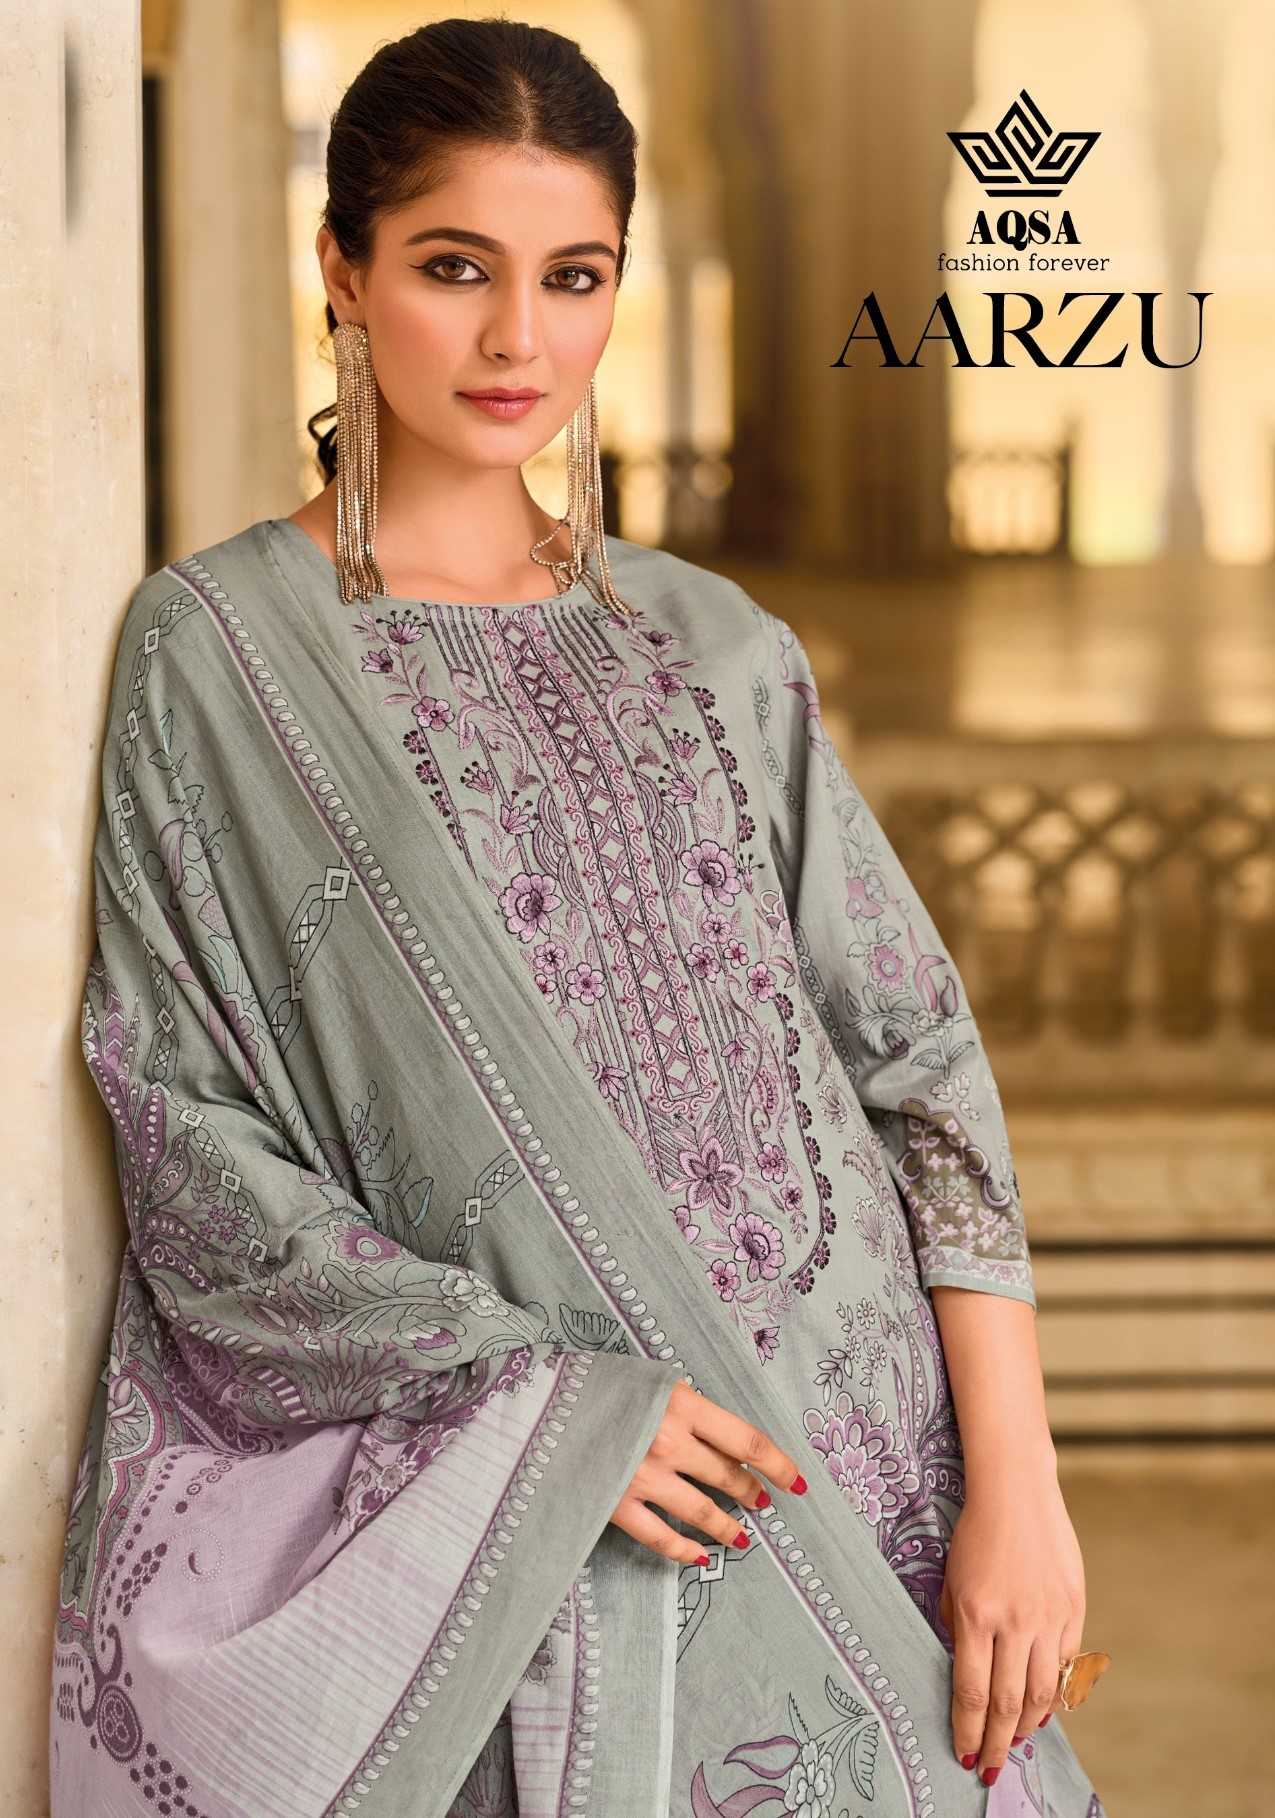 aqsa presents aarzoo simple pakistani style salwar suit dress material